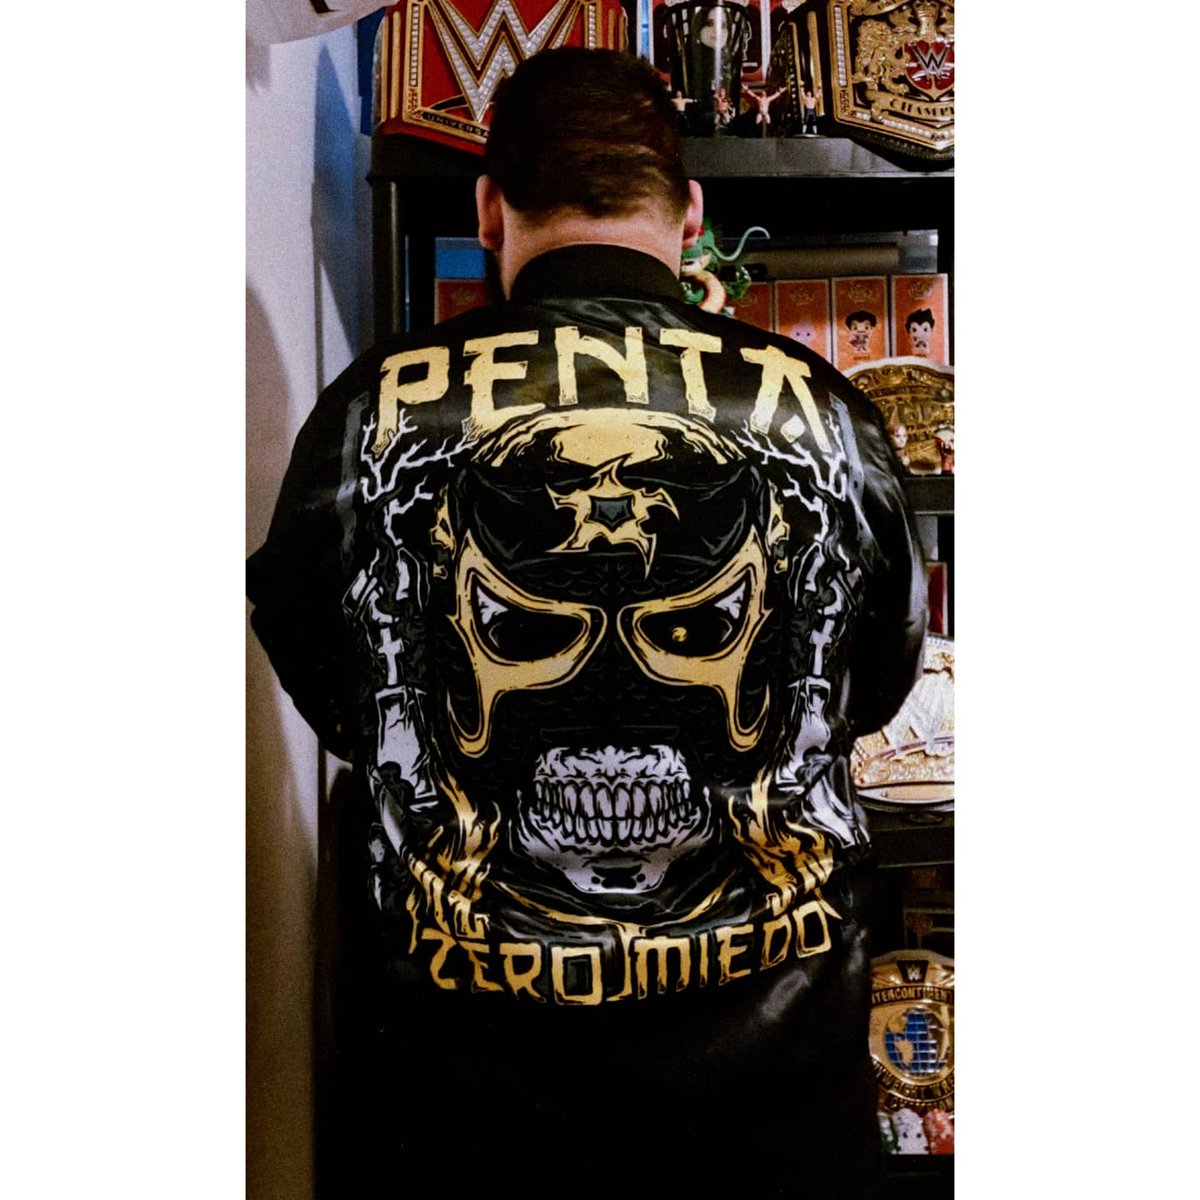 Zero Miedo!!
@NERDSClothingCo jacket of one of my favorites, @PENTAELZEROM 
@ReyFenixMx 
#pentaelzerom #reyfenix #AEW